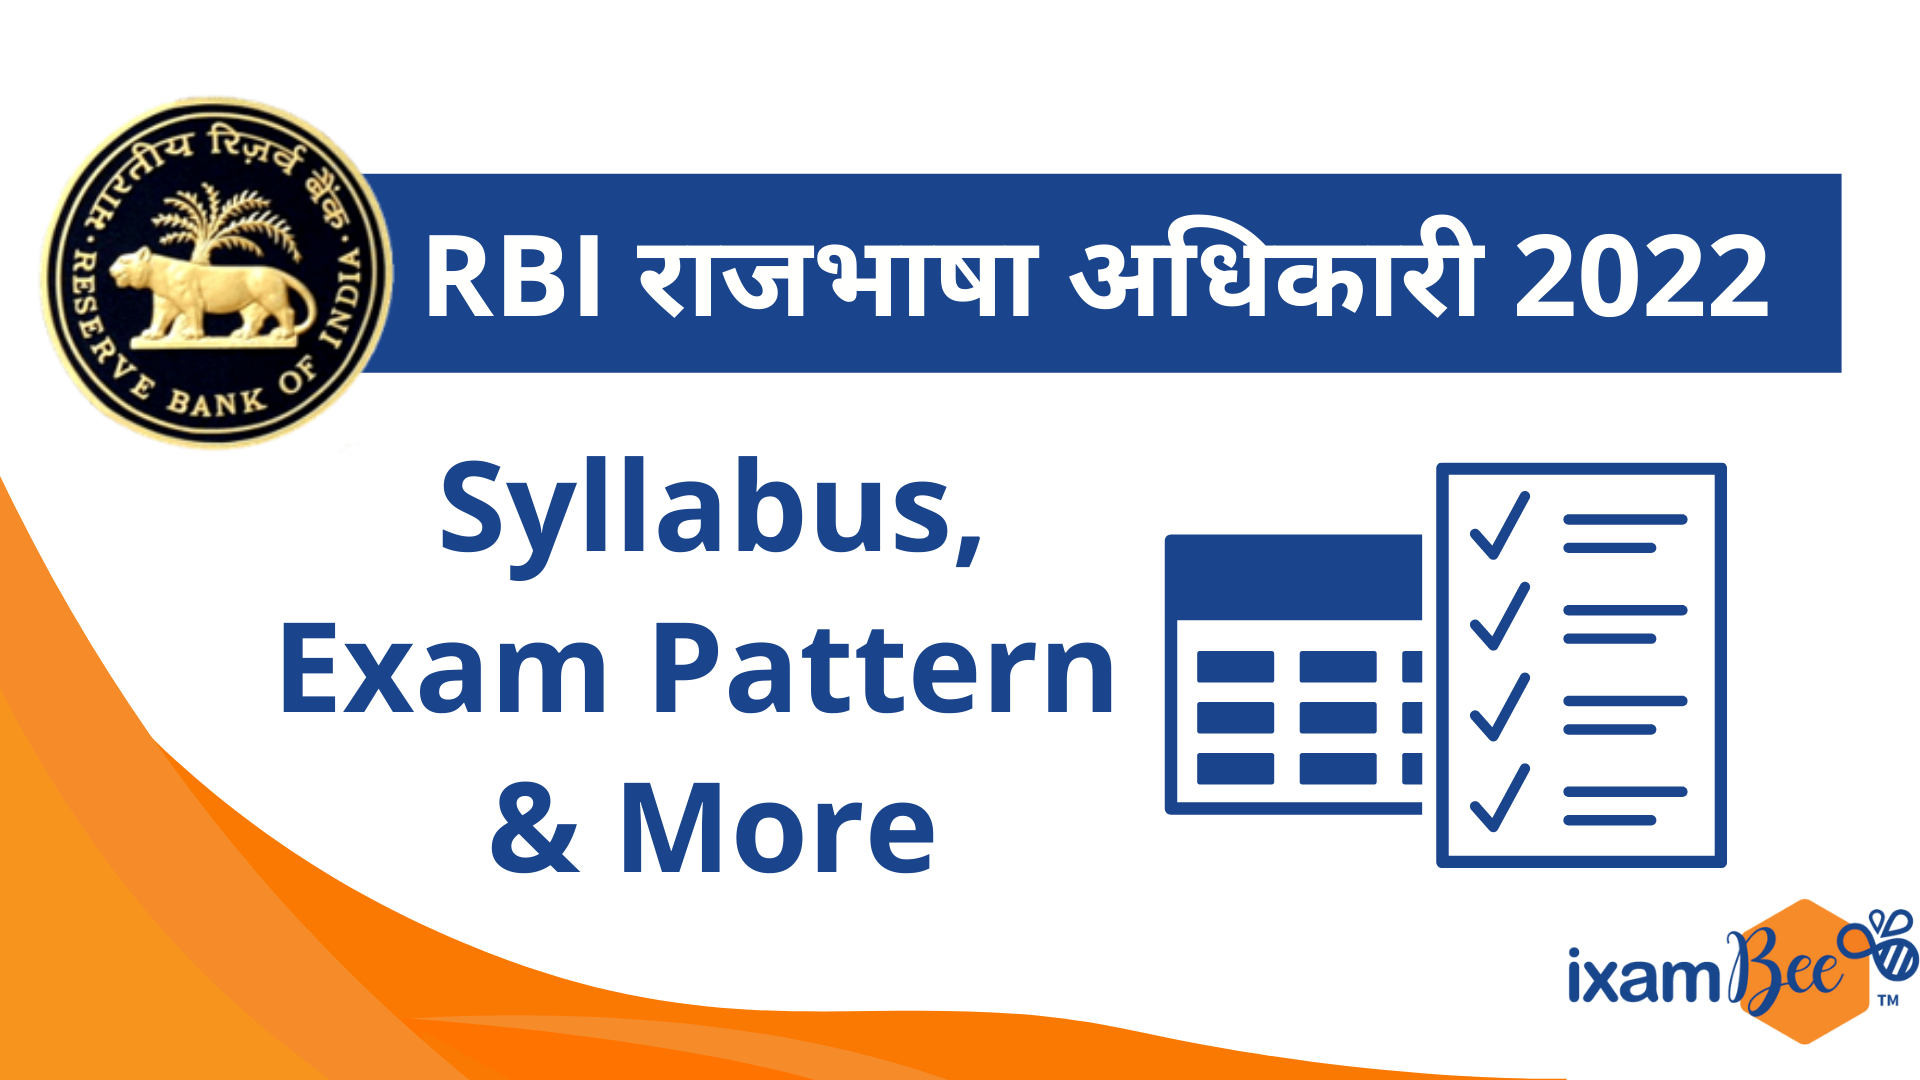 RBI Grade A Rajbhasha Exam 2022: Syllabus & Exam Pattern for RBI राजभाषा अधिकारी